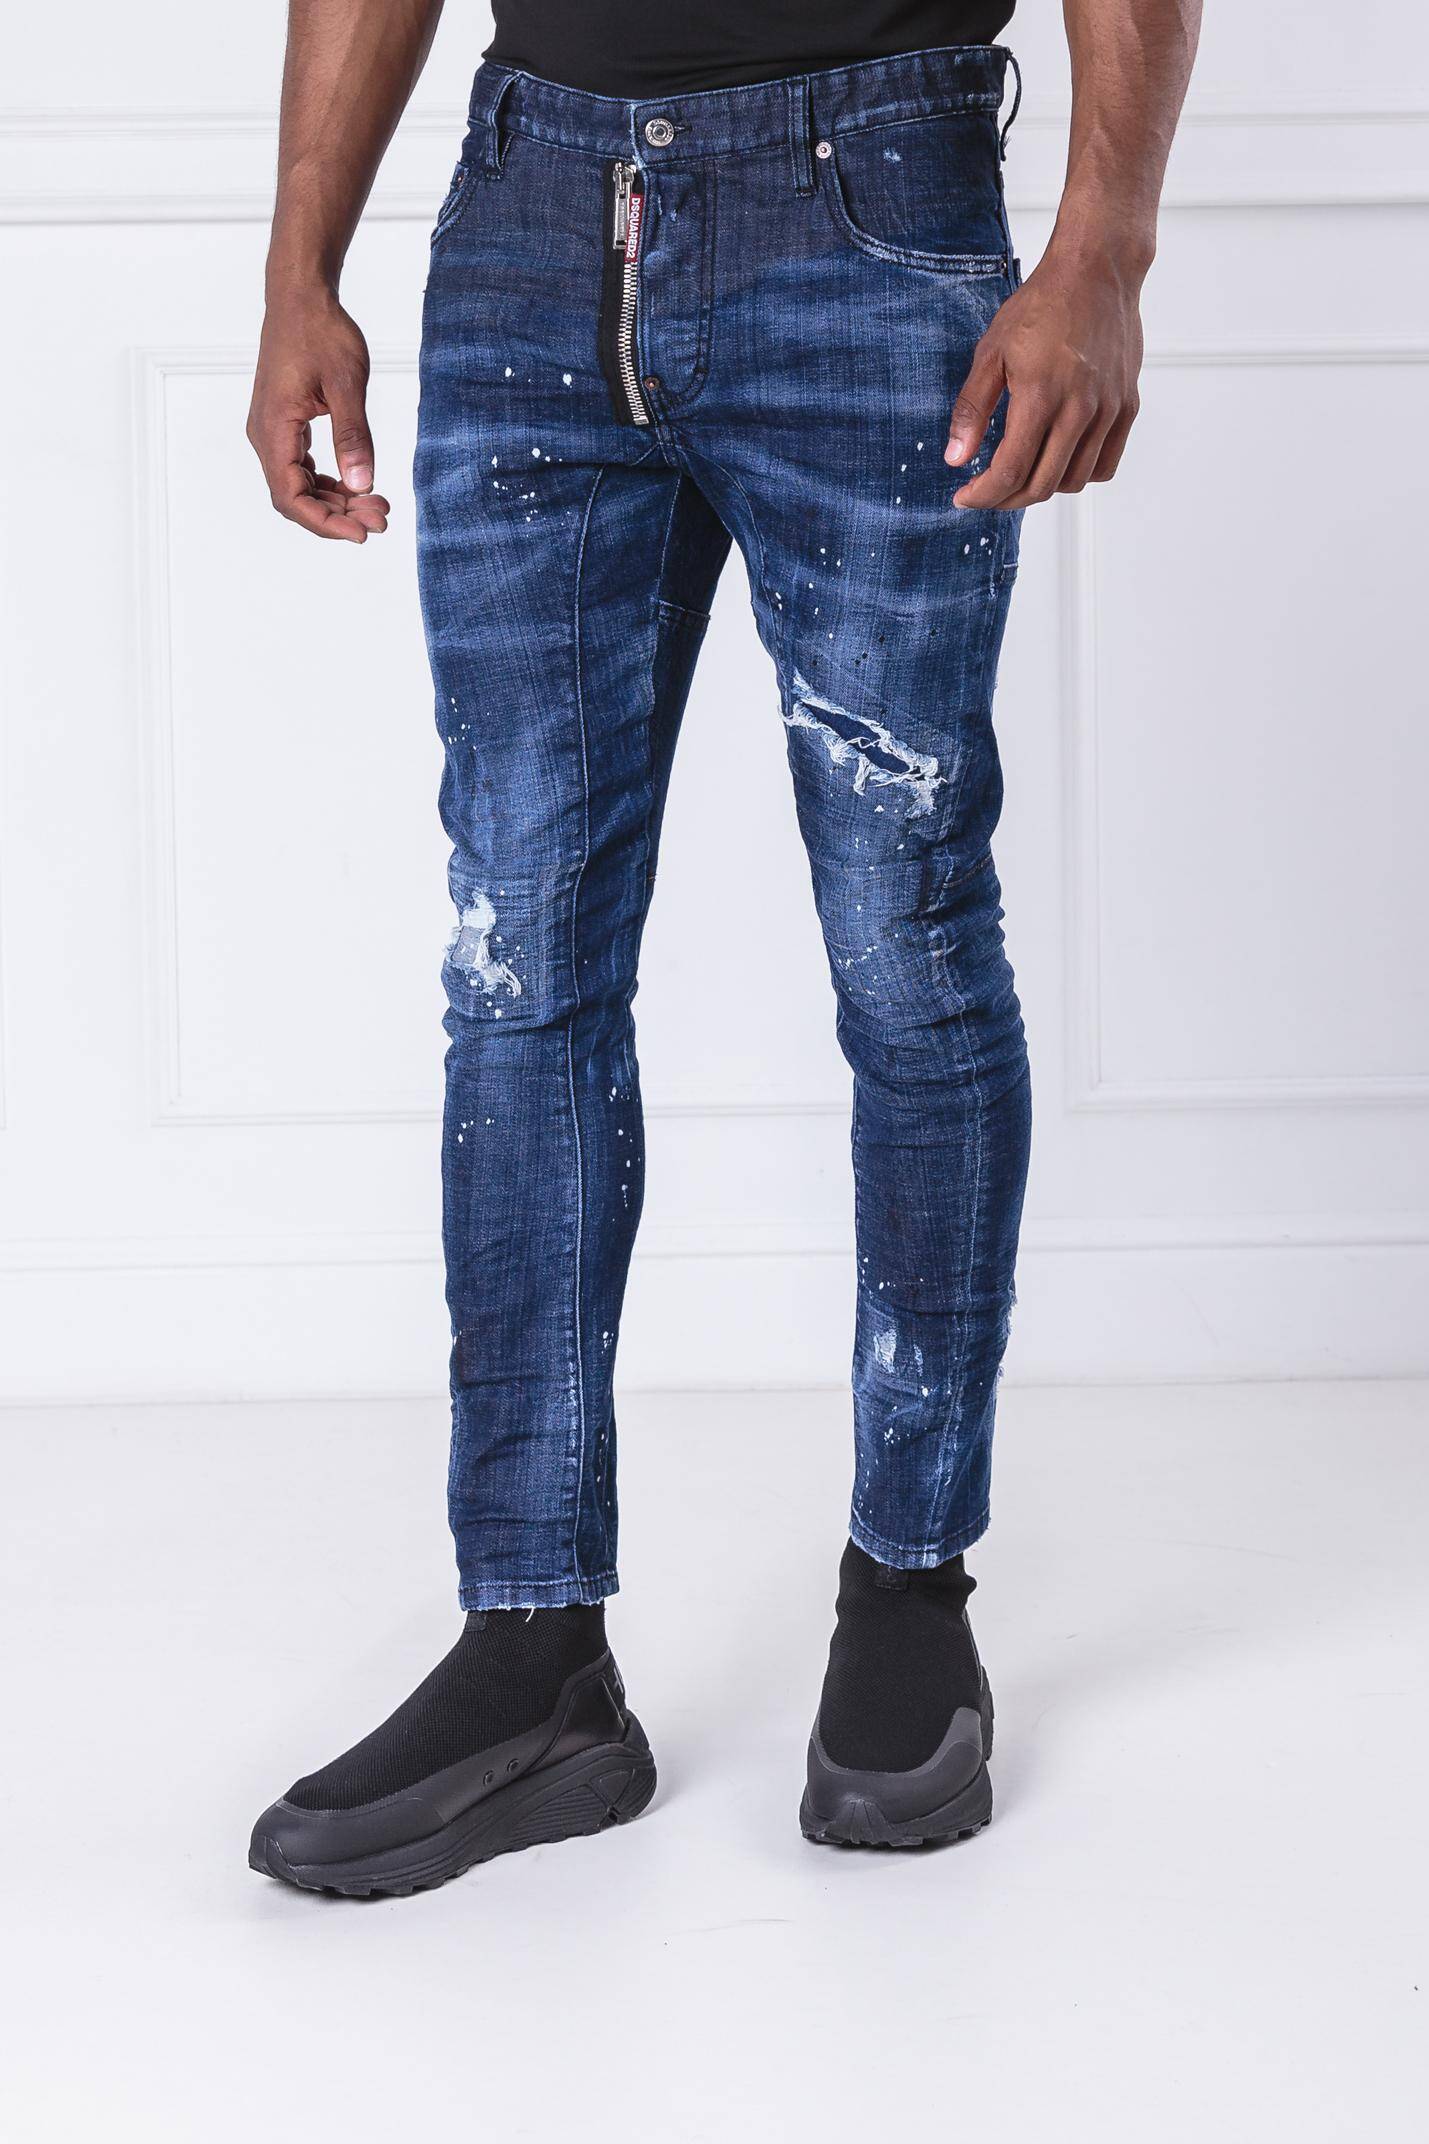 Jeans tidy biker jean | Tapered 